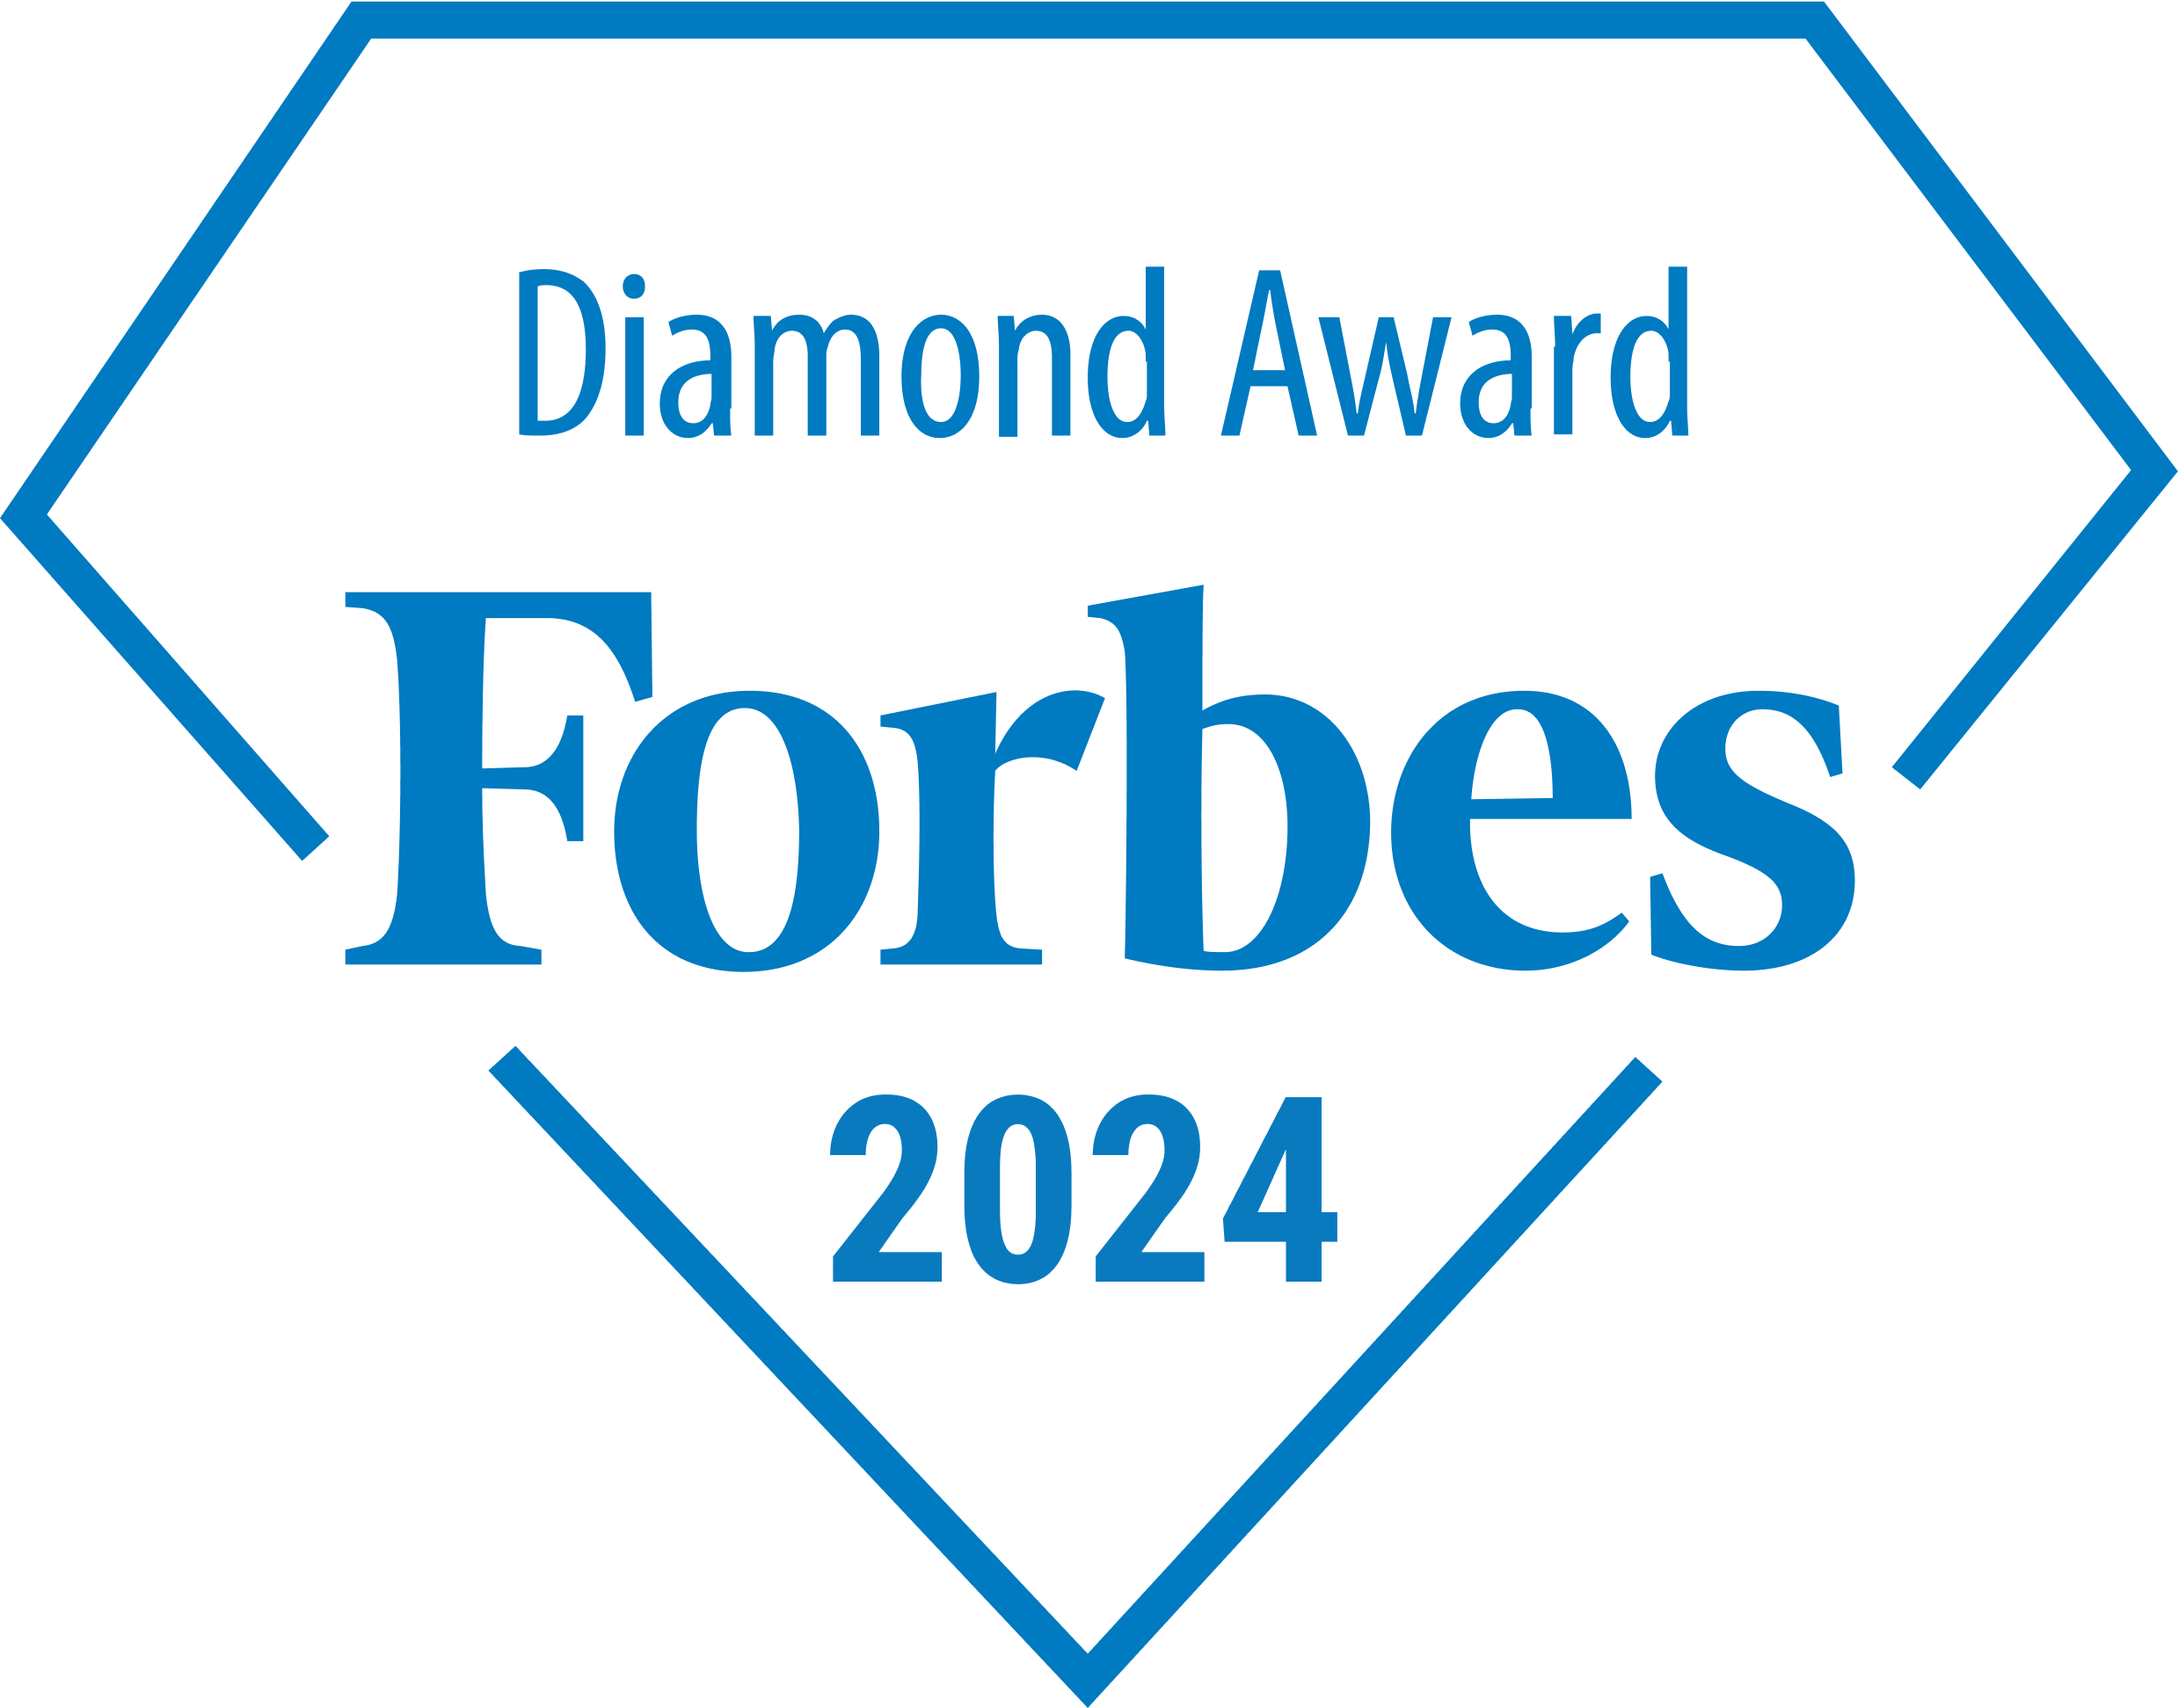 Diamond Award Forbes 2024